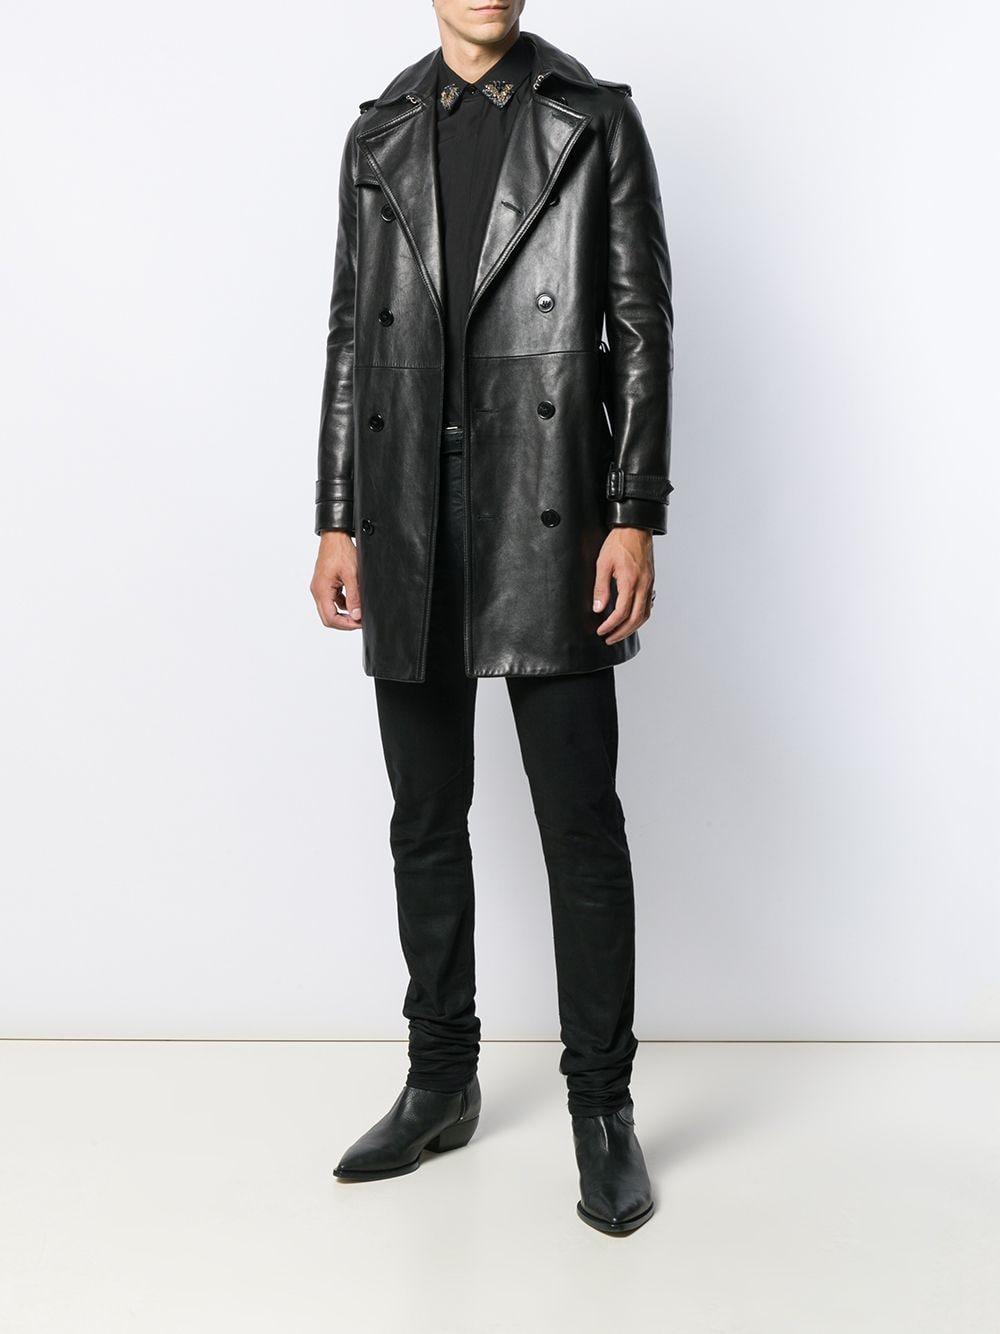 Saint Laurent Leather Trench Coat in Black for Men - Lyst